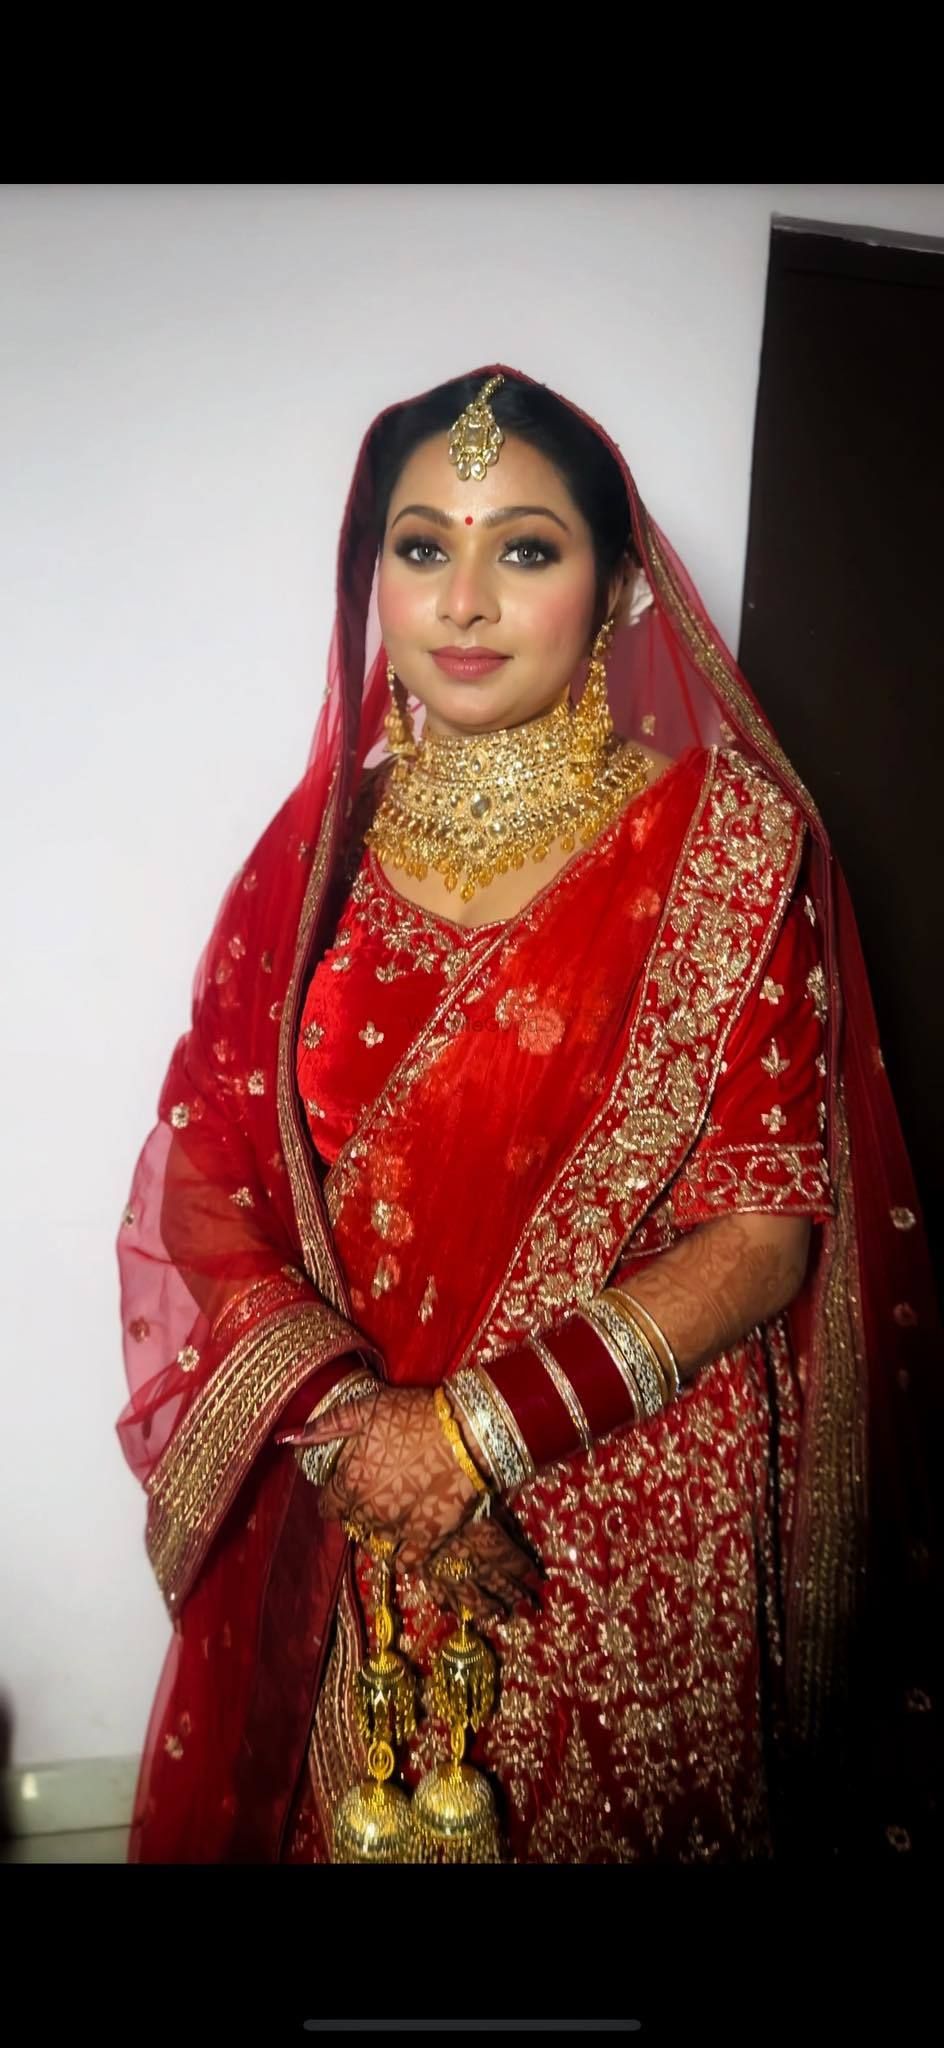 Photo By Manmohini by Mehak Rishi - Bridal Makeup